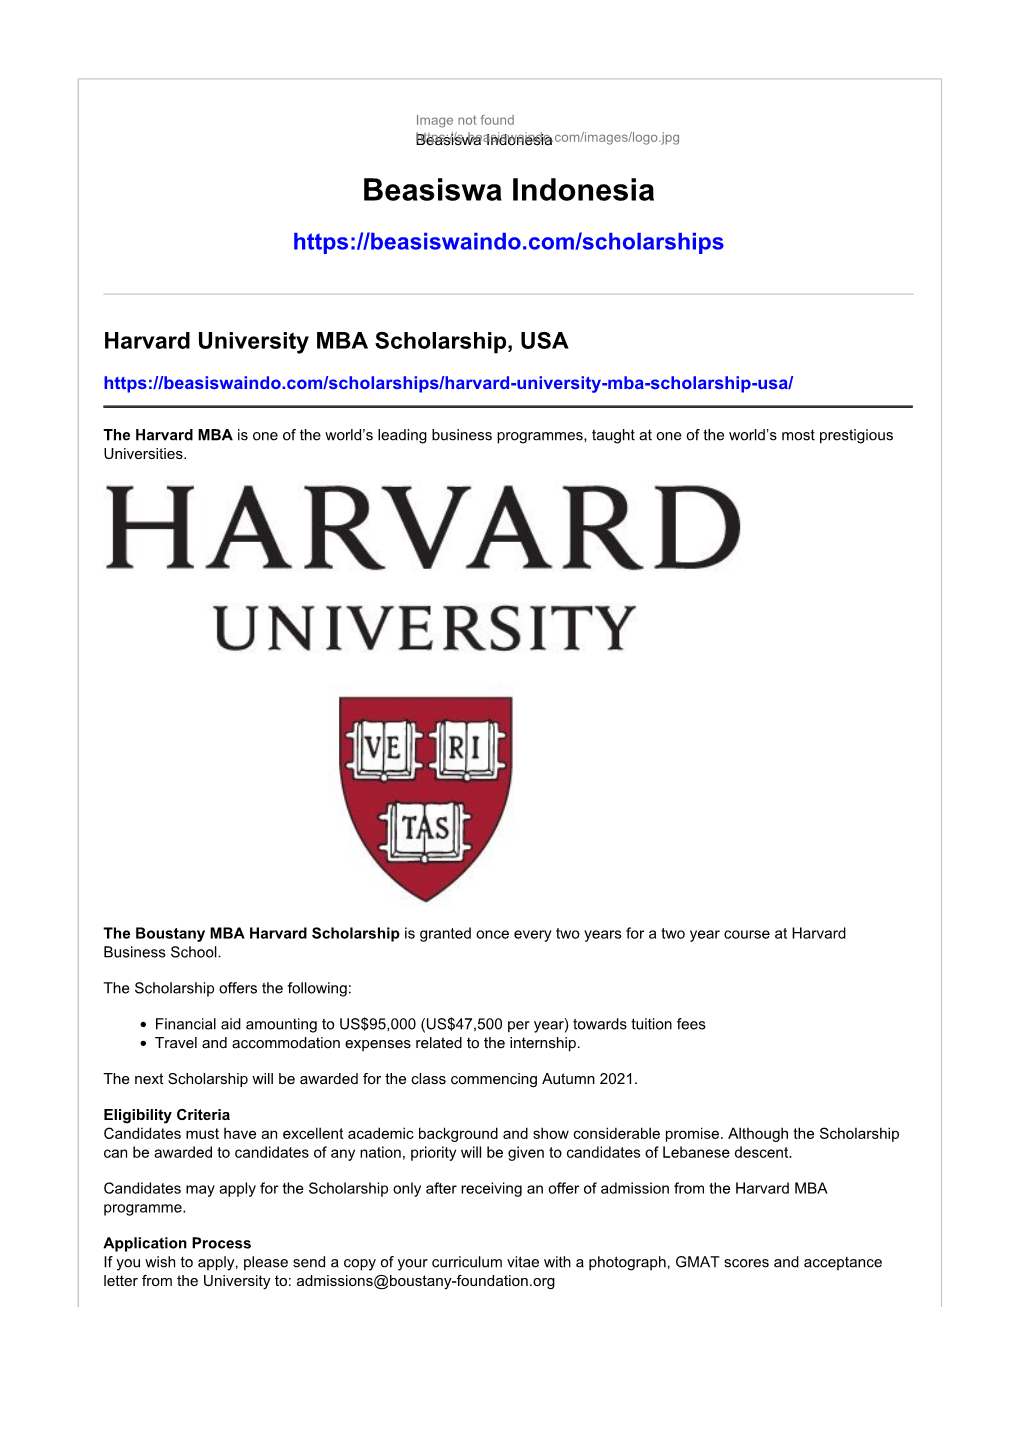 Harvard University MBA Scholarship, USA